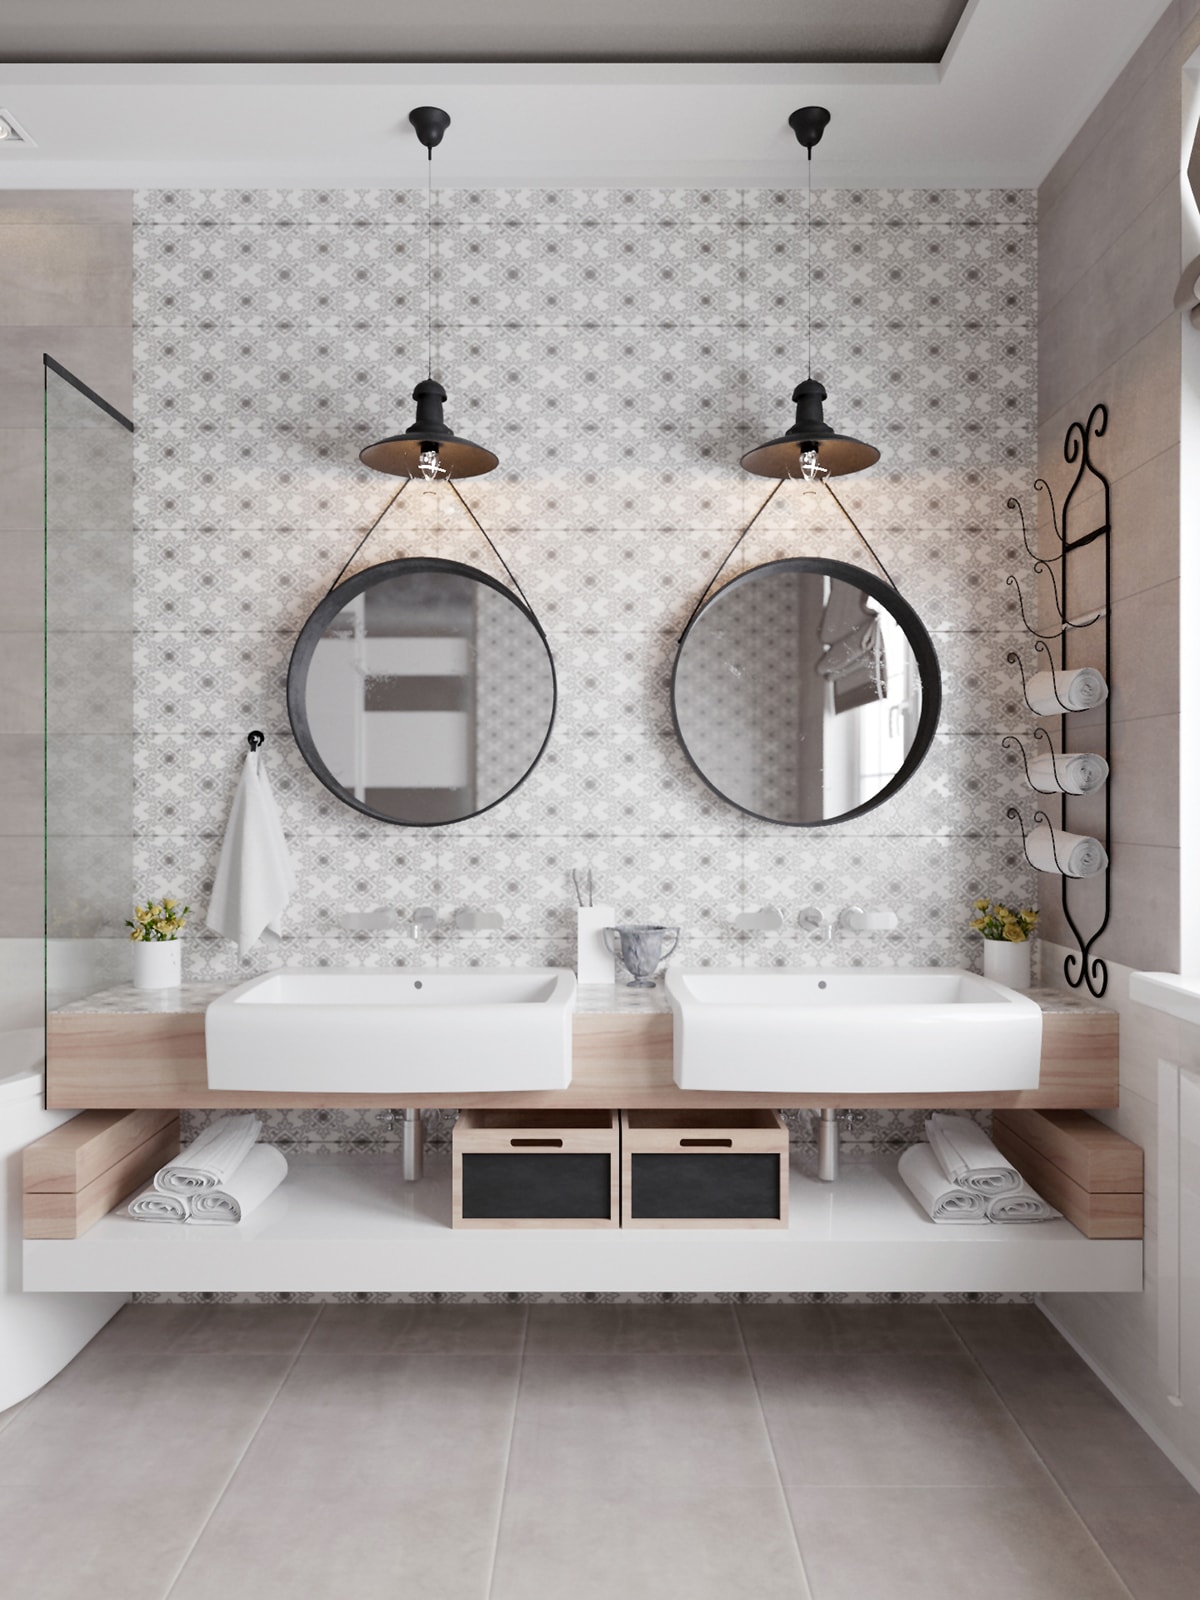 Bathroom Interior Design To Love